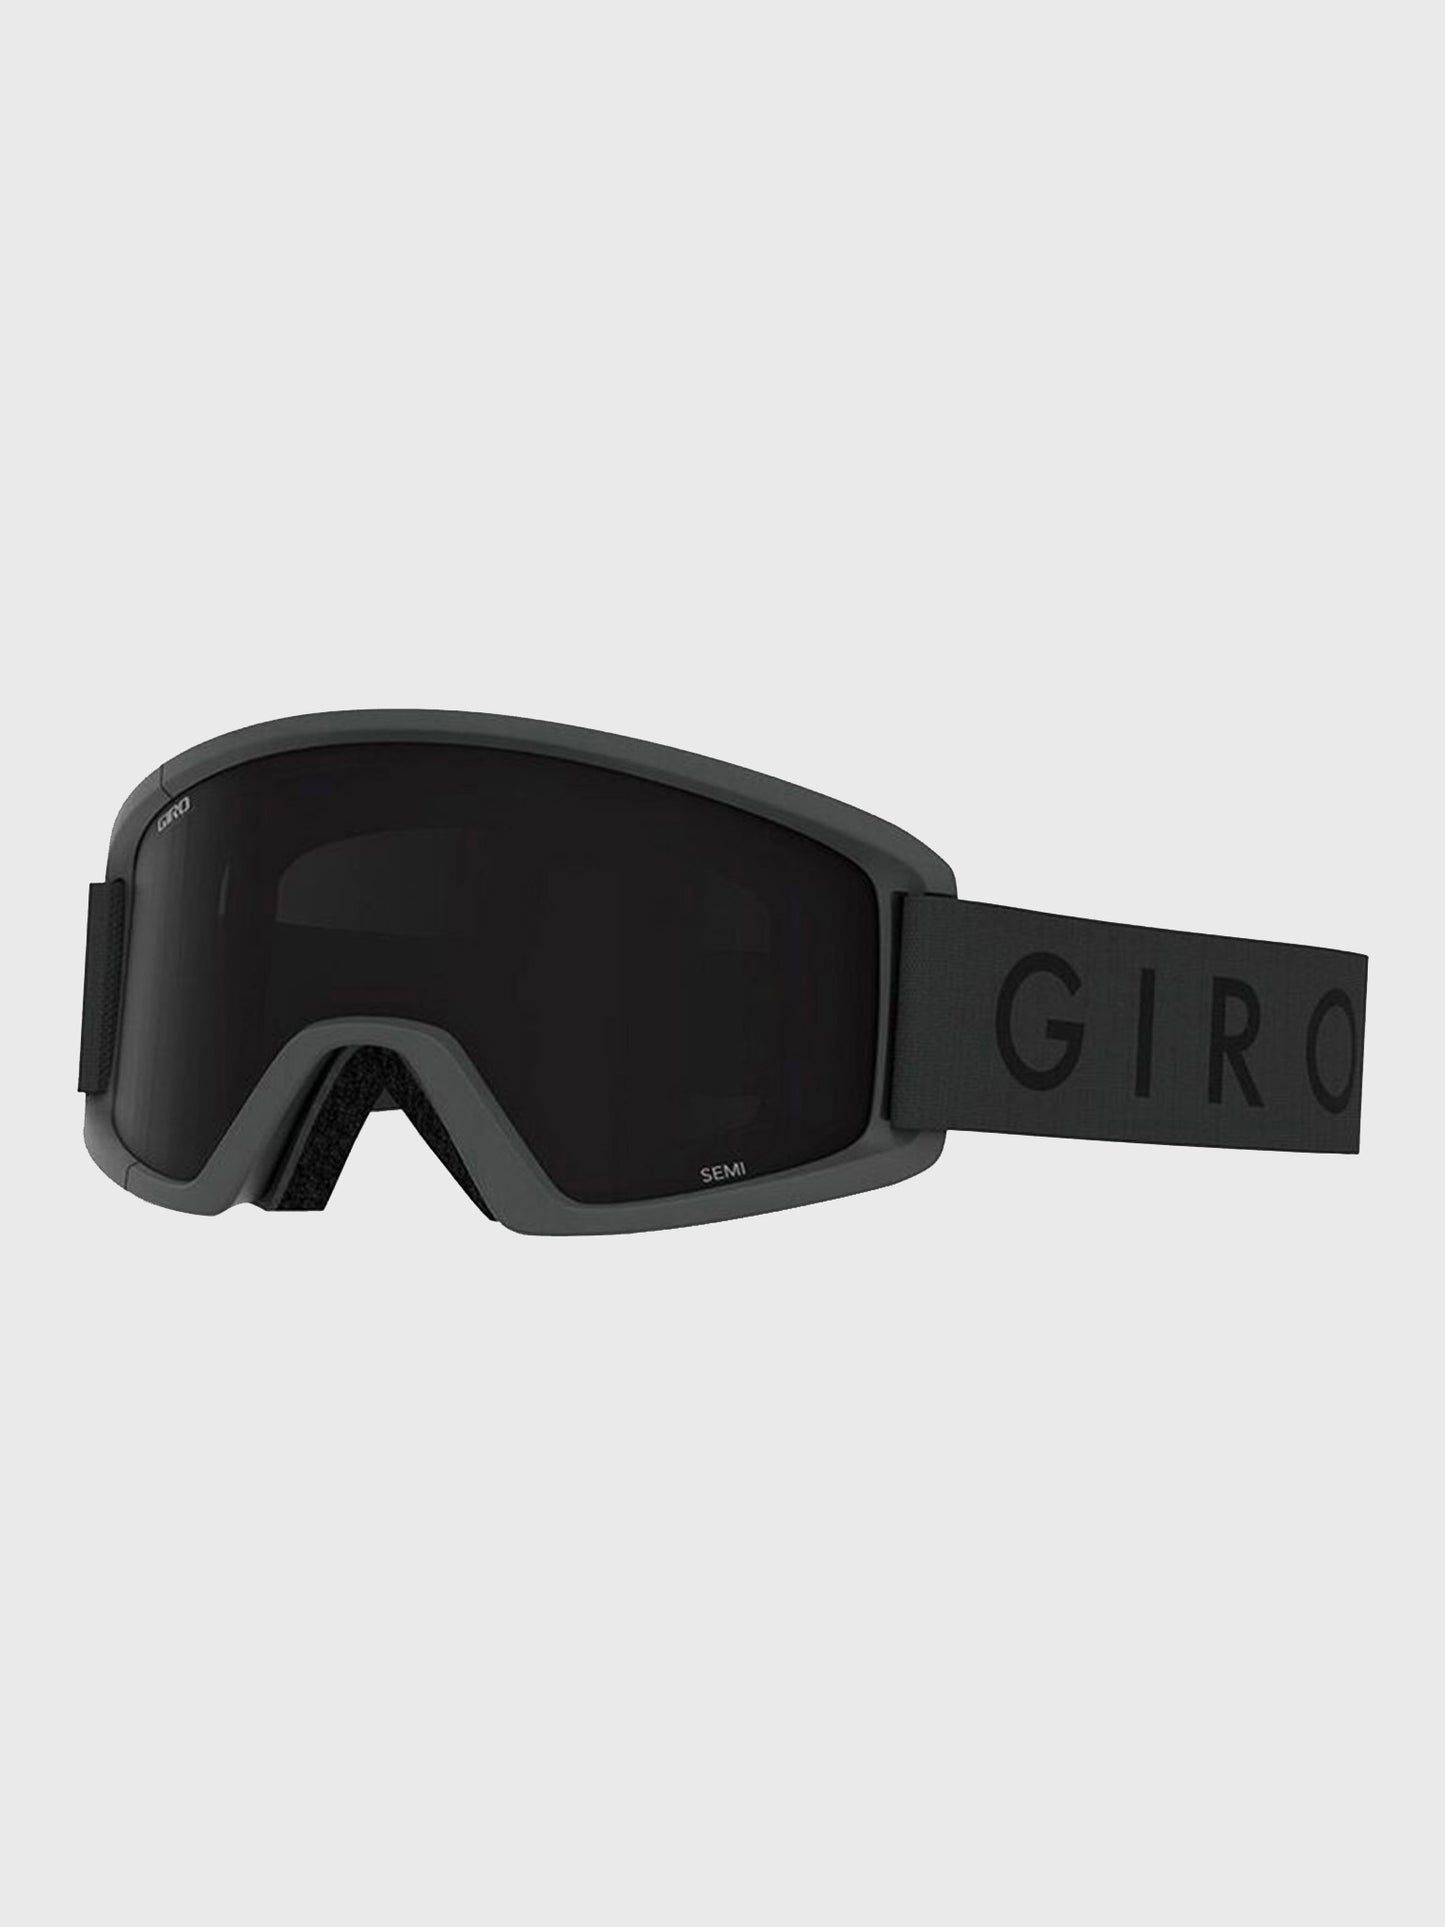 GIRO Semi Goggle – saintbernard.com